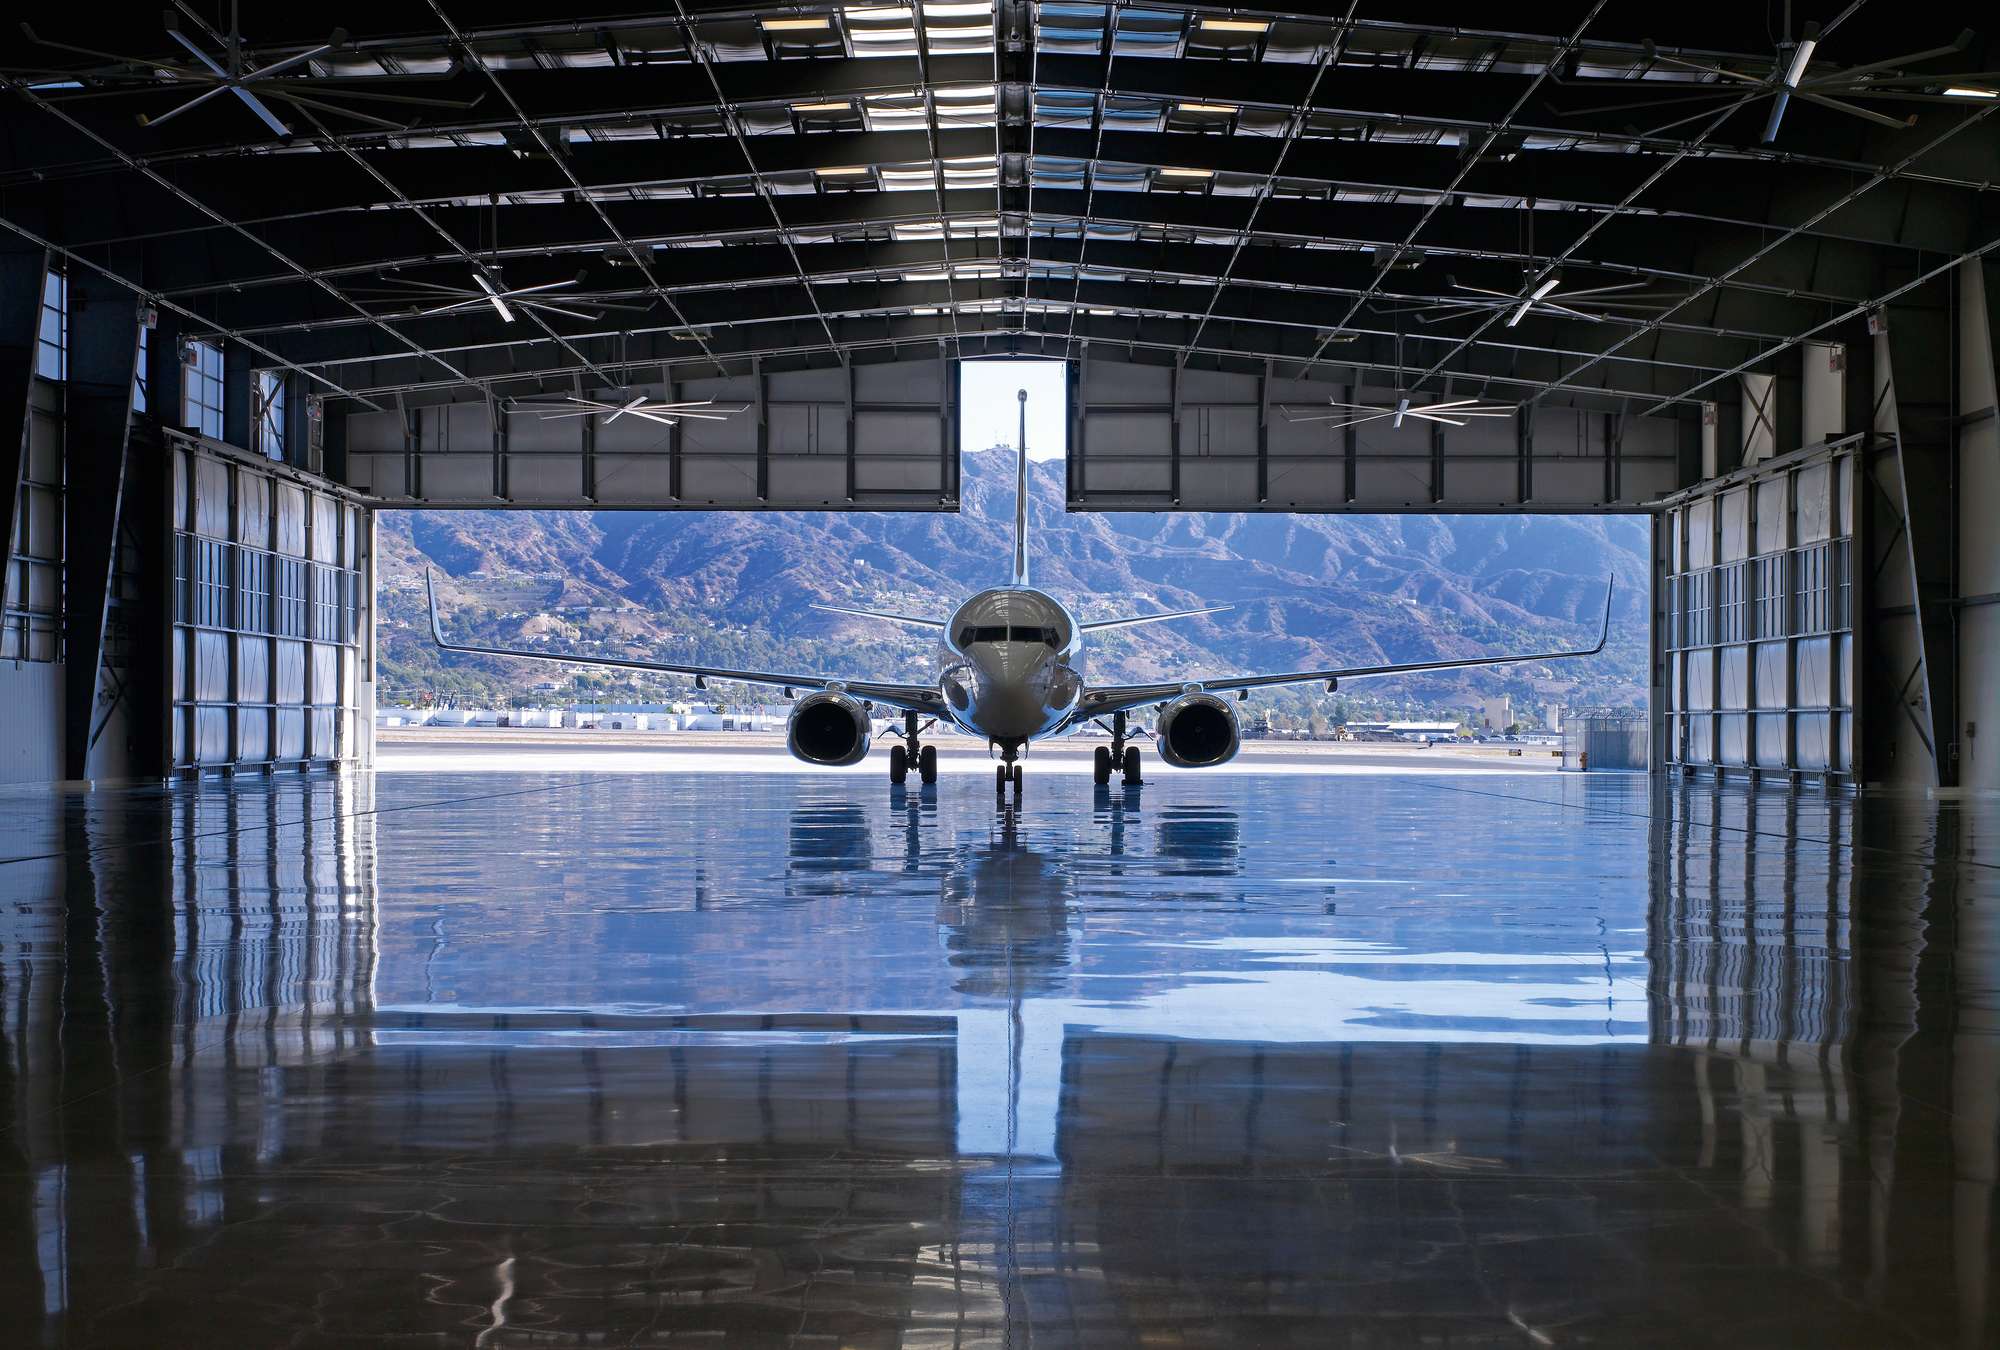             Vliegtuighangar - fotobehang 3D optiek vliegtuigen hangar
        